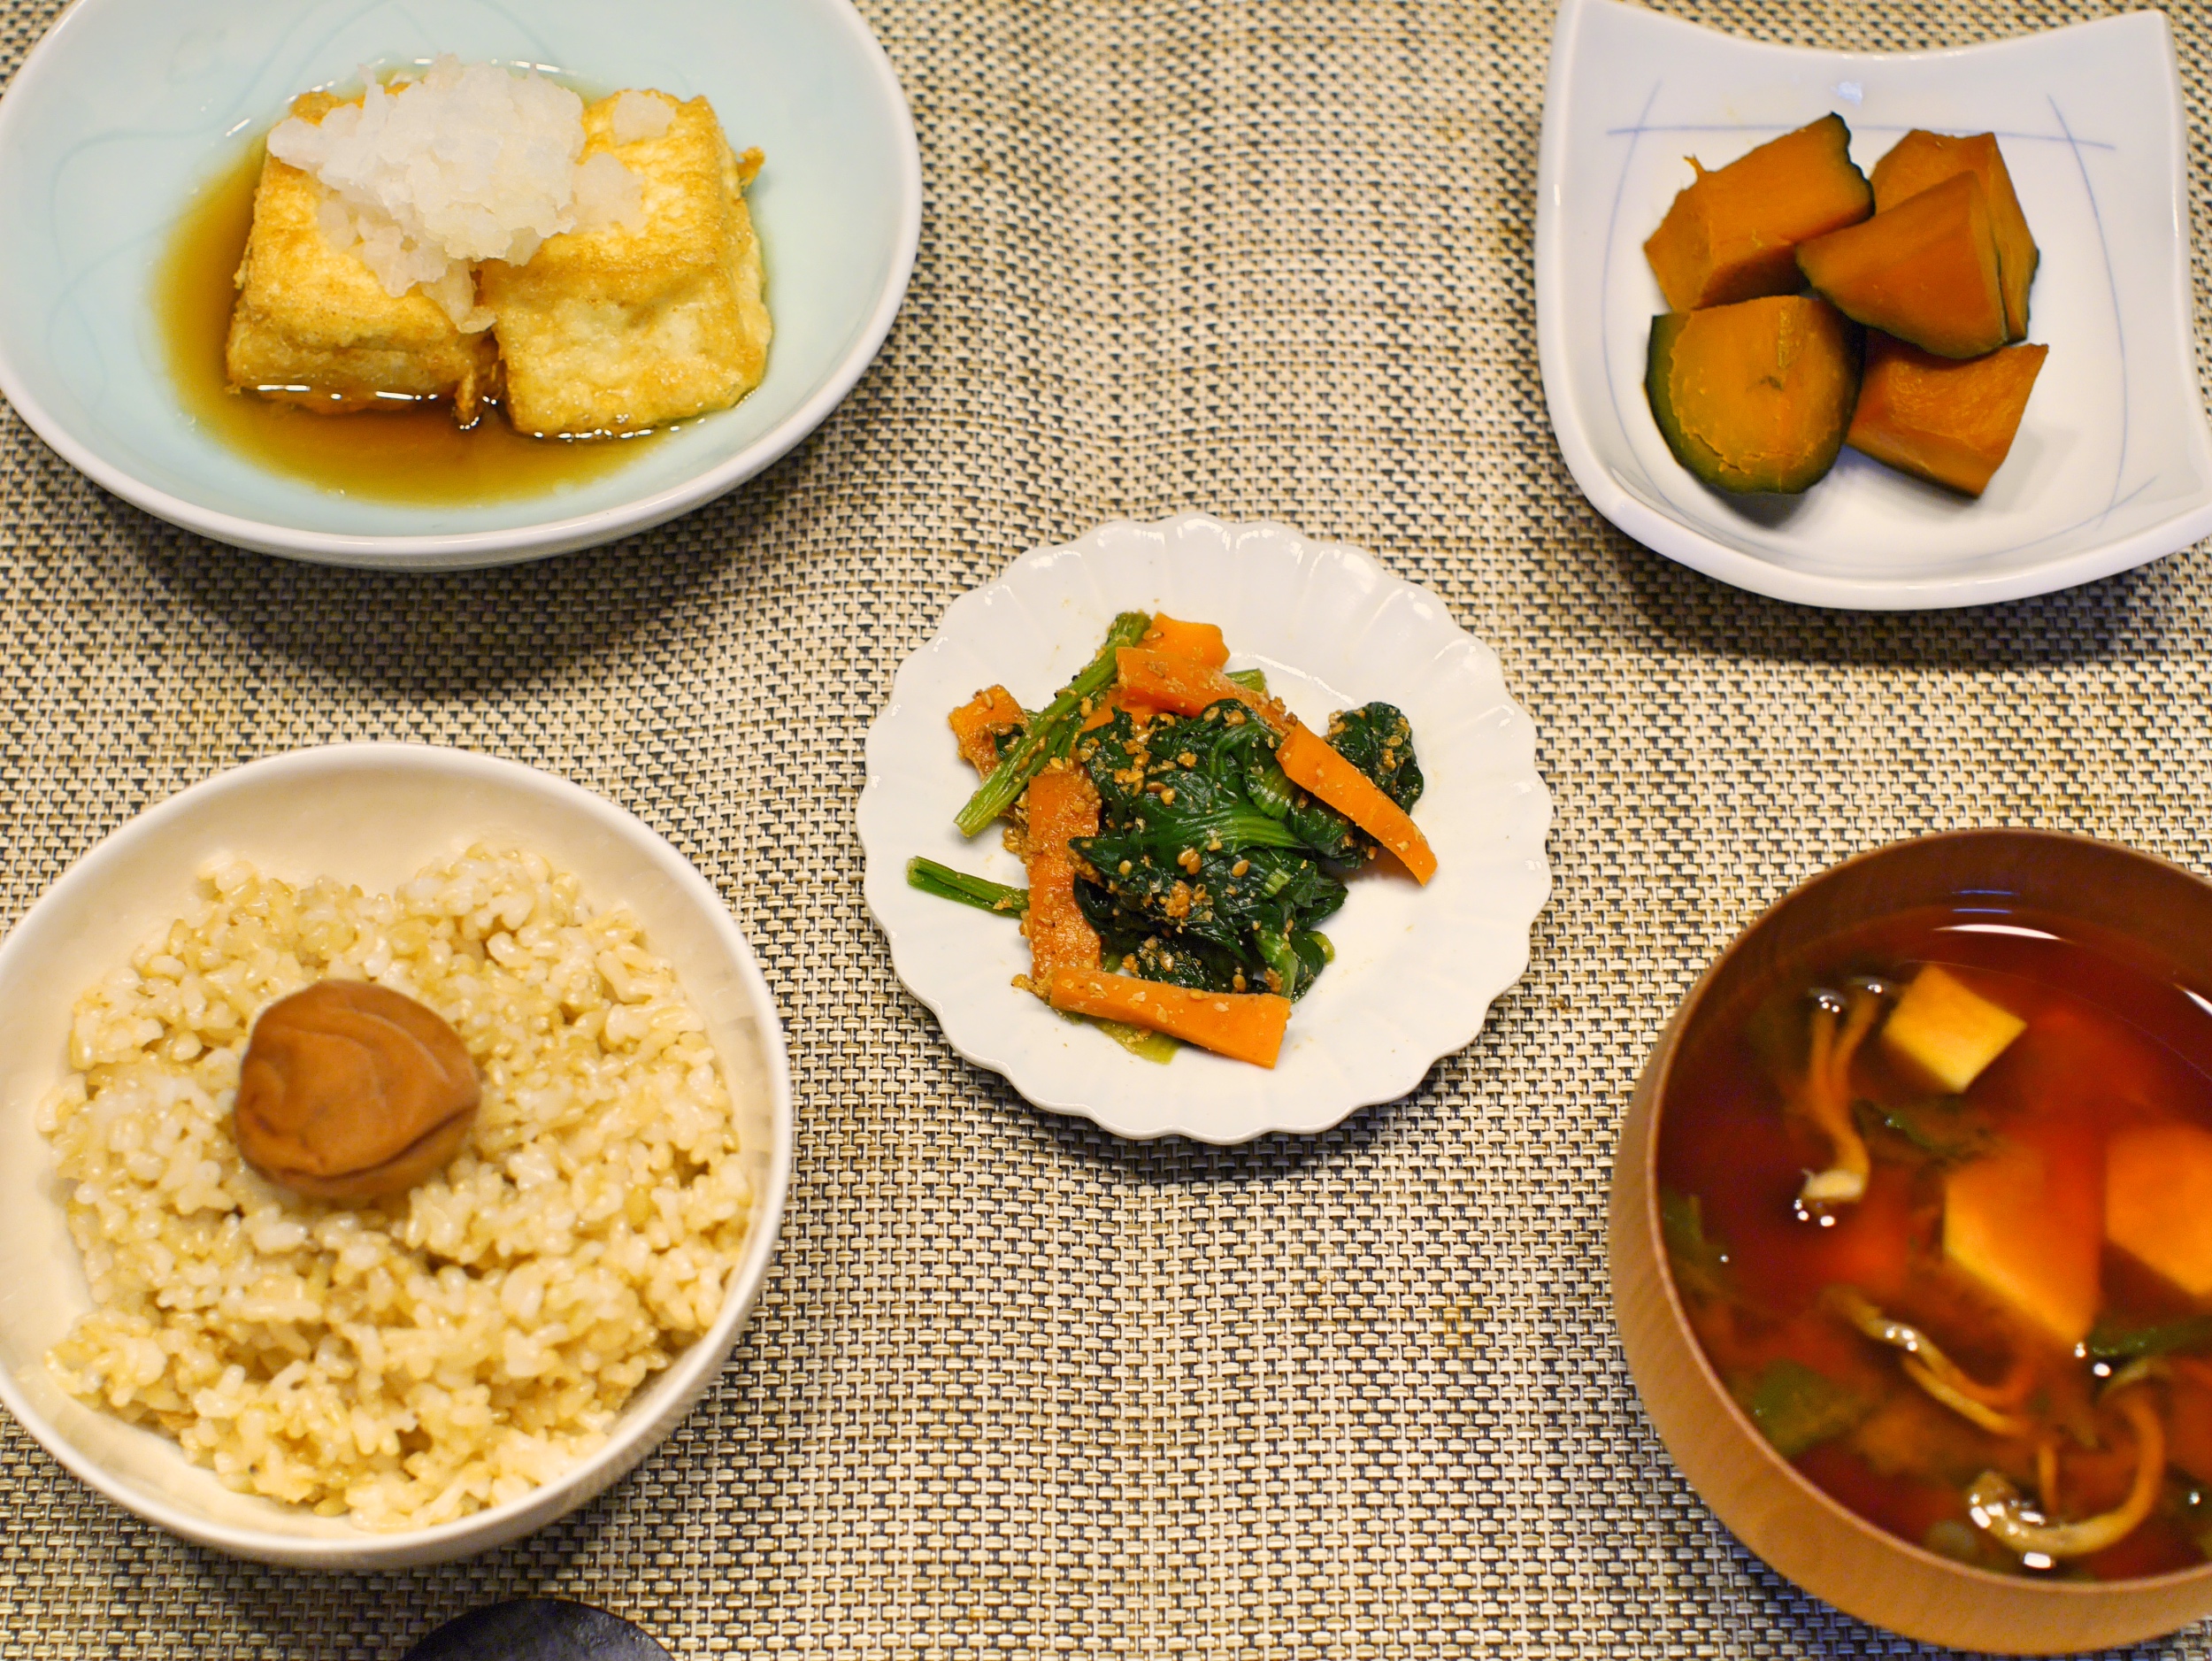 //Organic//Agedashi-dofu and seasonal vegetable dishes for vegans and vegetarians